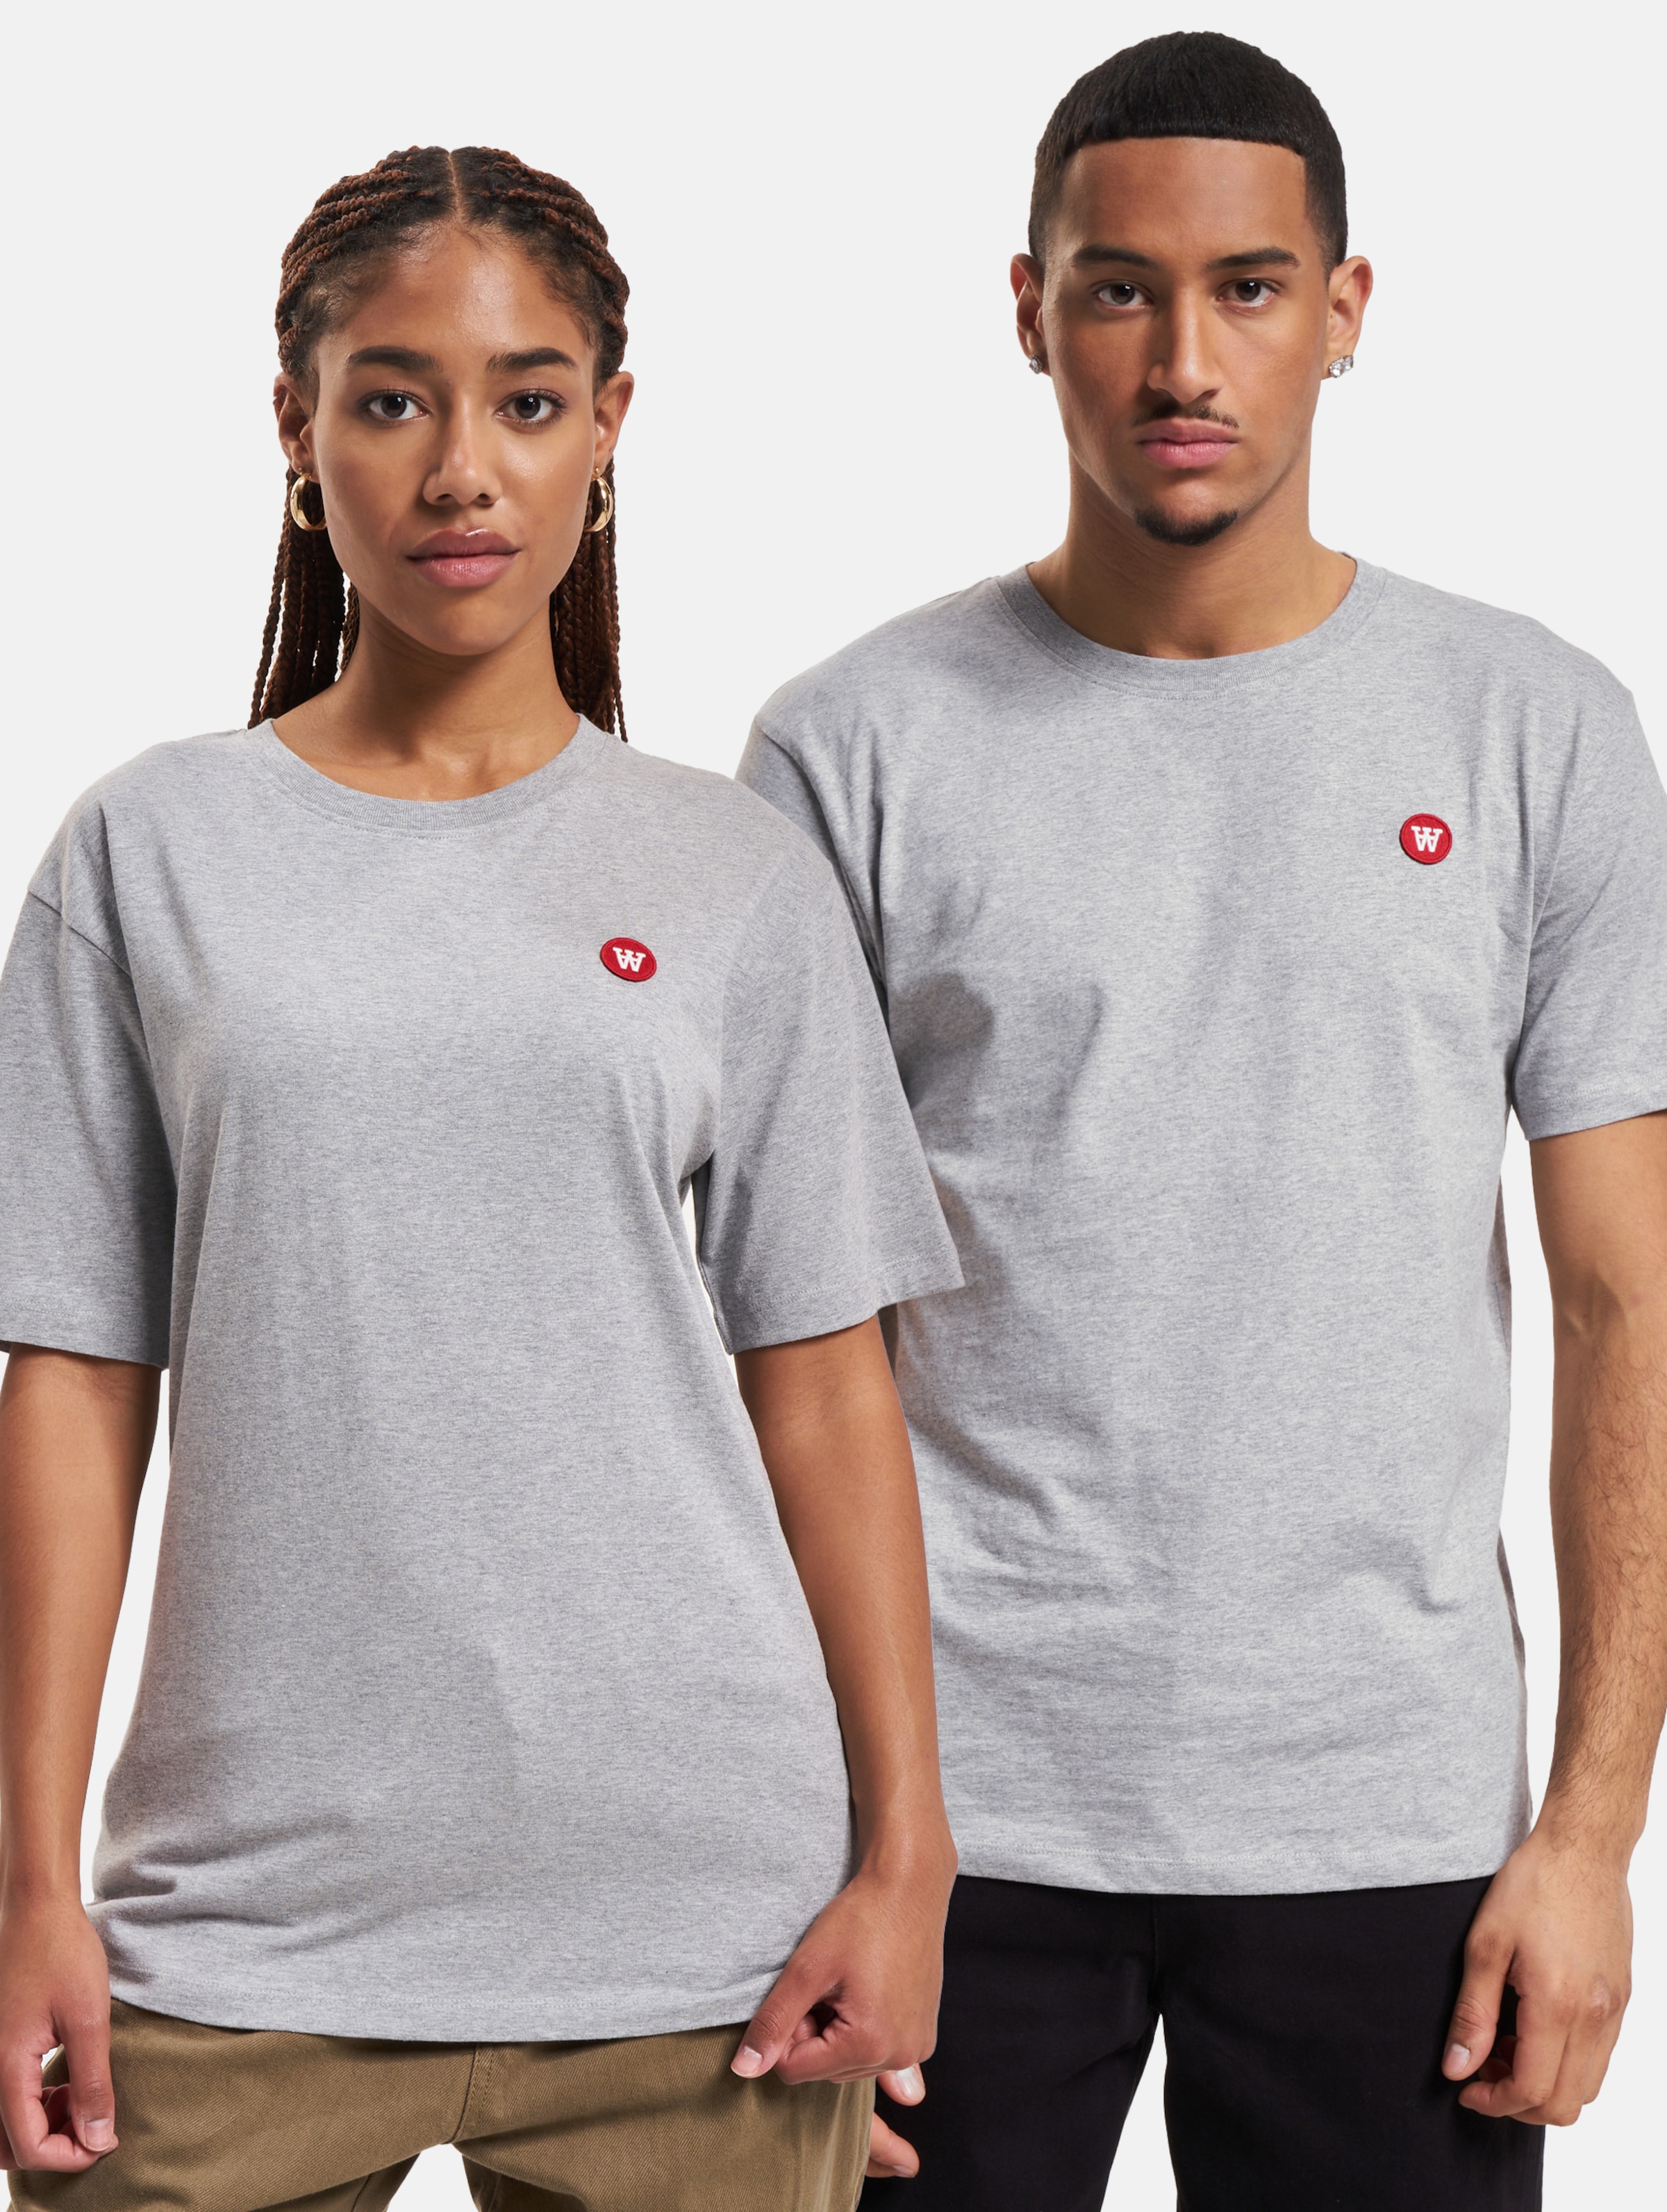 Wood Ace Badge T-Shirt Gots Vrouwen op kleur grijs, Maat L